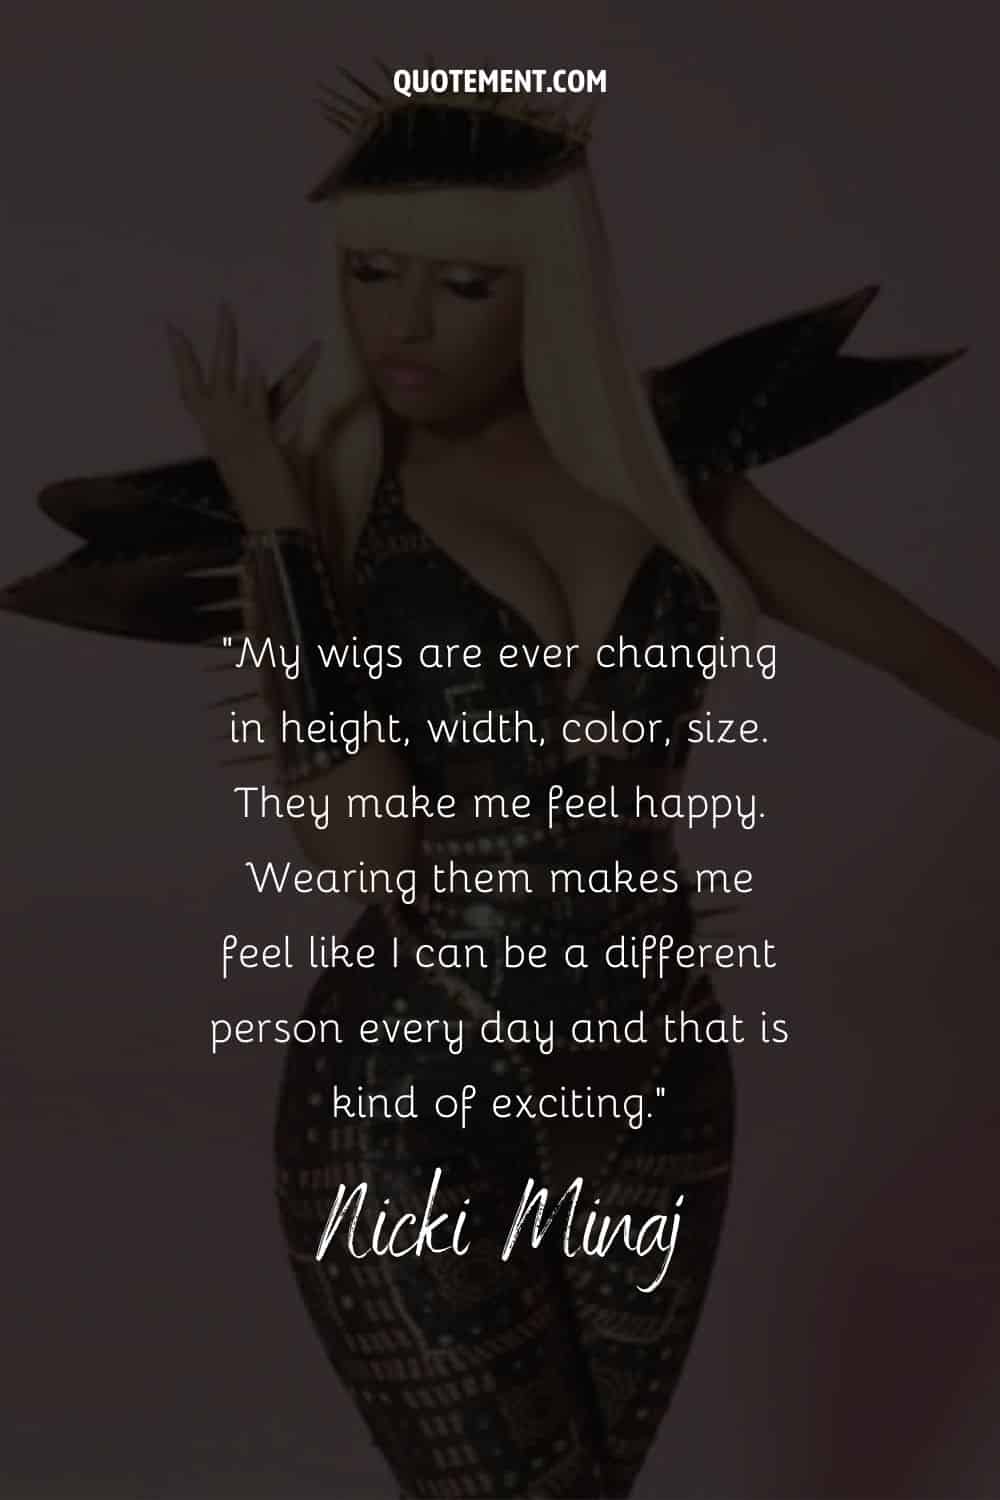 Cita inspiradora sobre pelucas de Nicki Minaj y su foto de fondo